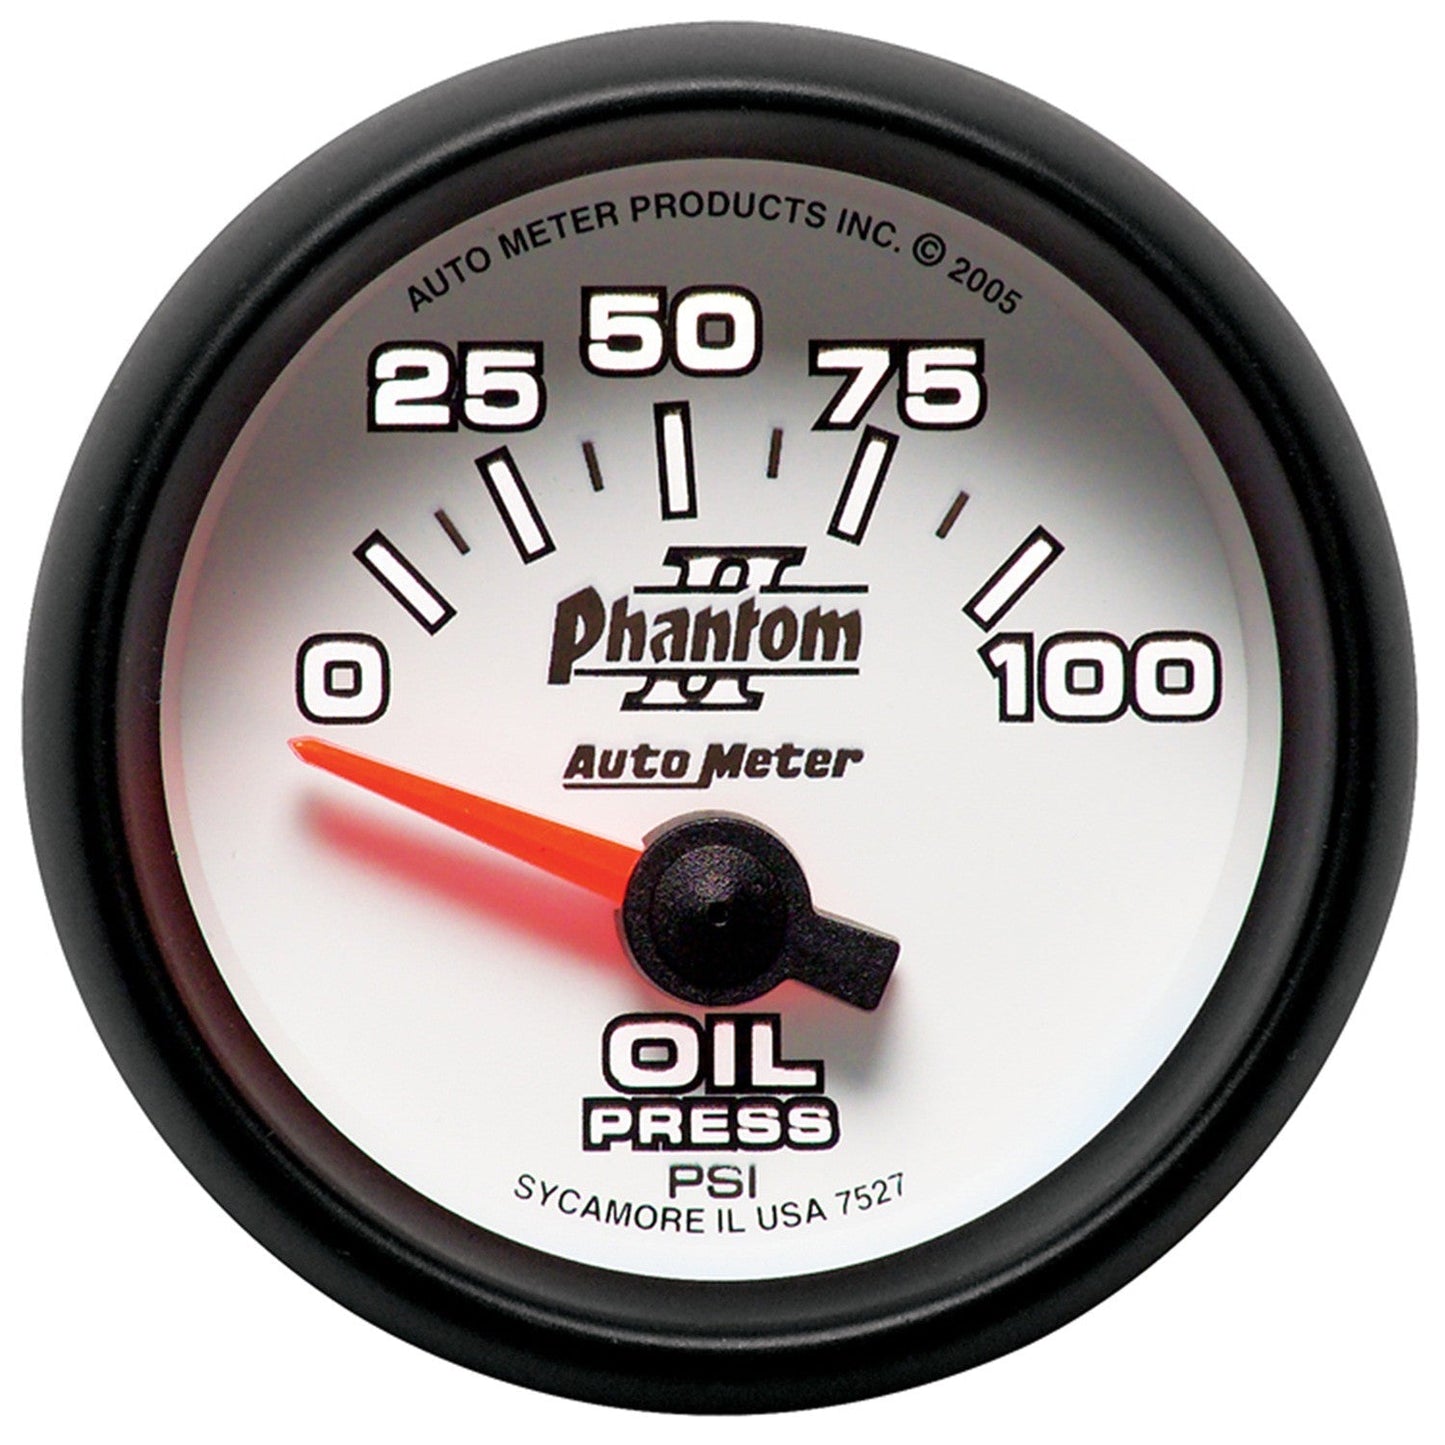 AutoMeter - 2-1/16" OIL PRESSURE, 0-100 PSI, AIR-CORE, PHANTOM II (7527)